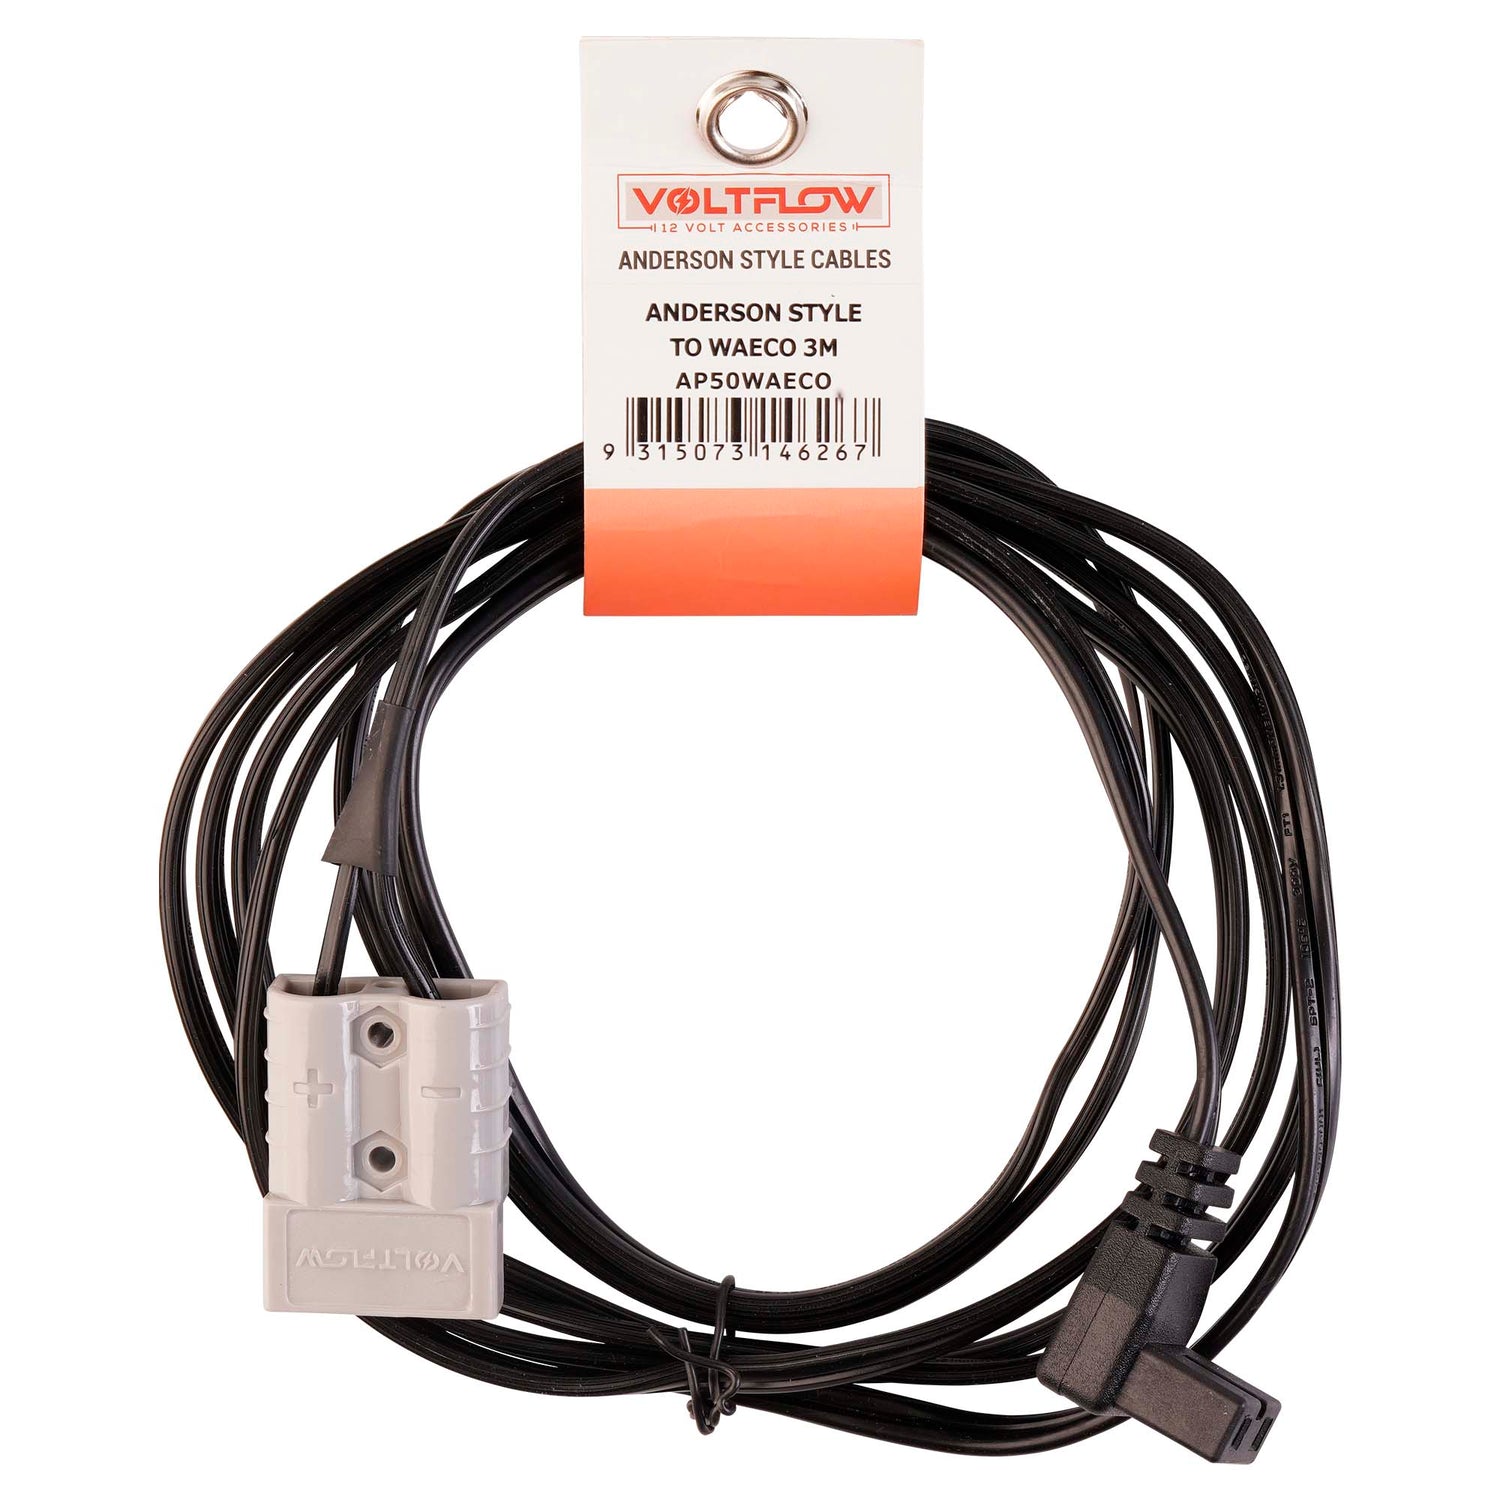 Voltflow Andersen Plug to Dometic/Waeco Fridge 3m cord - AP50WAECO